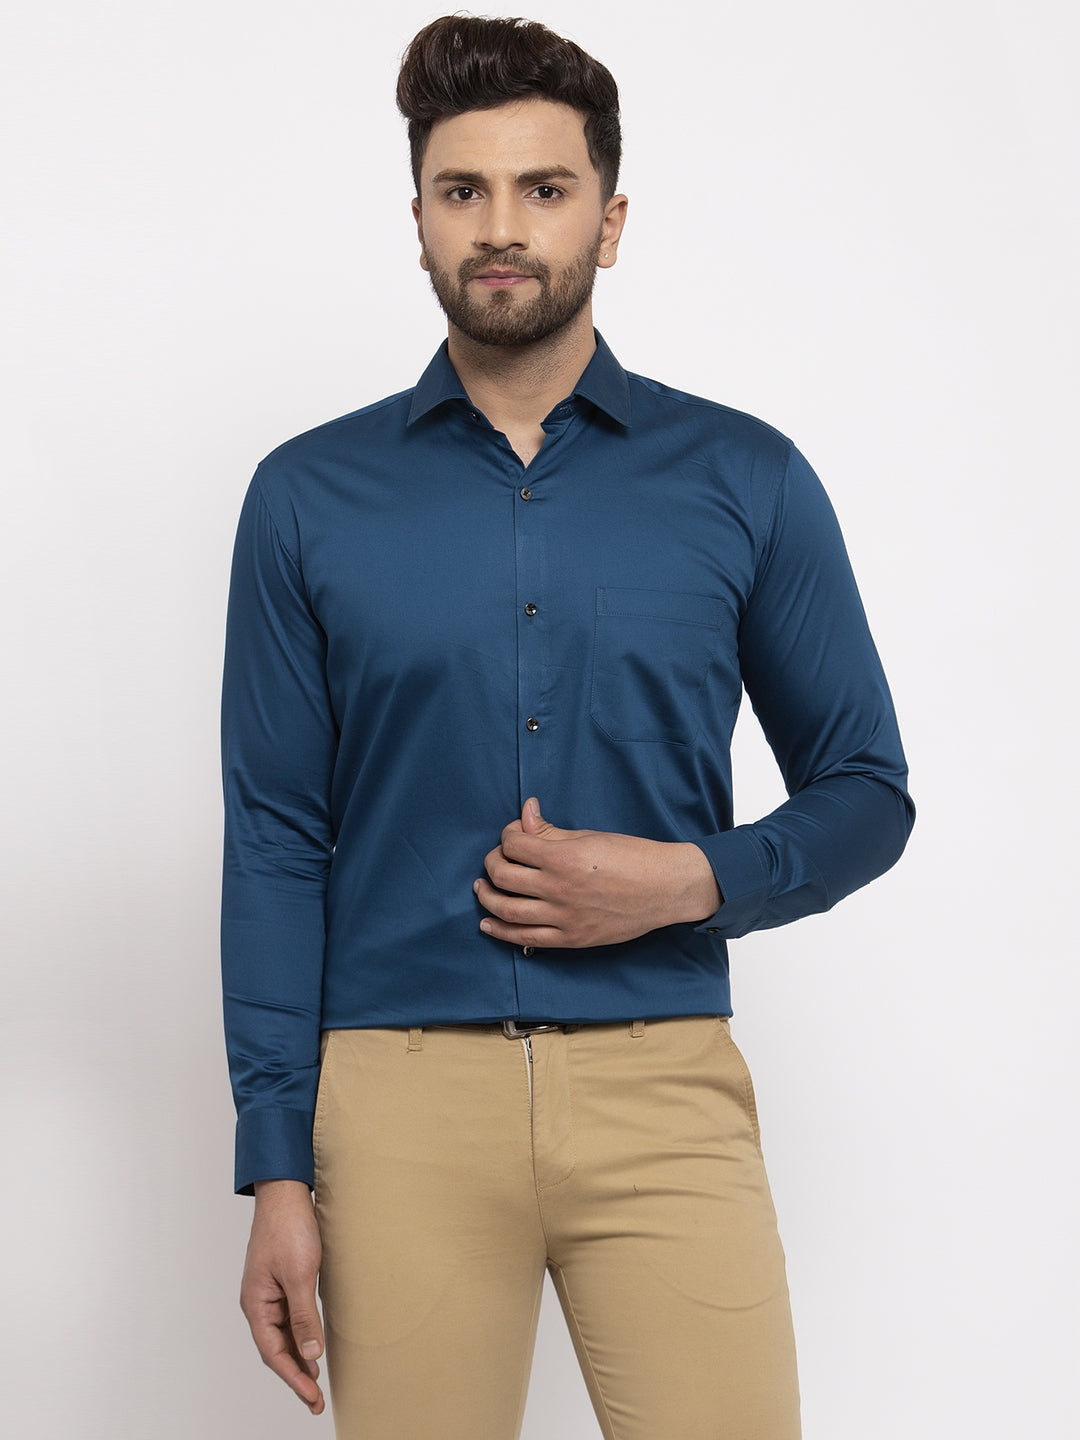 Men's Navy Cotton Solid Formal Shirt's ( SF 768Navy ) - Jainish